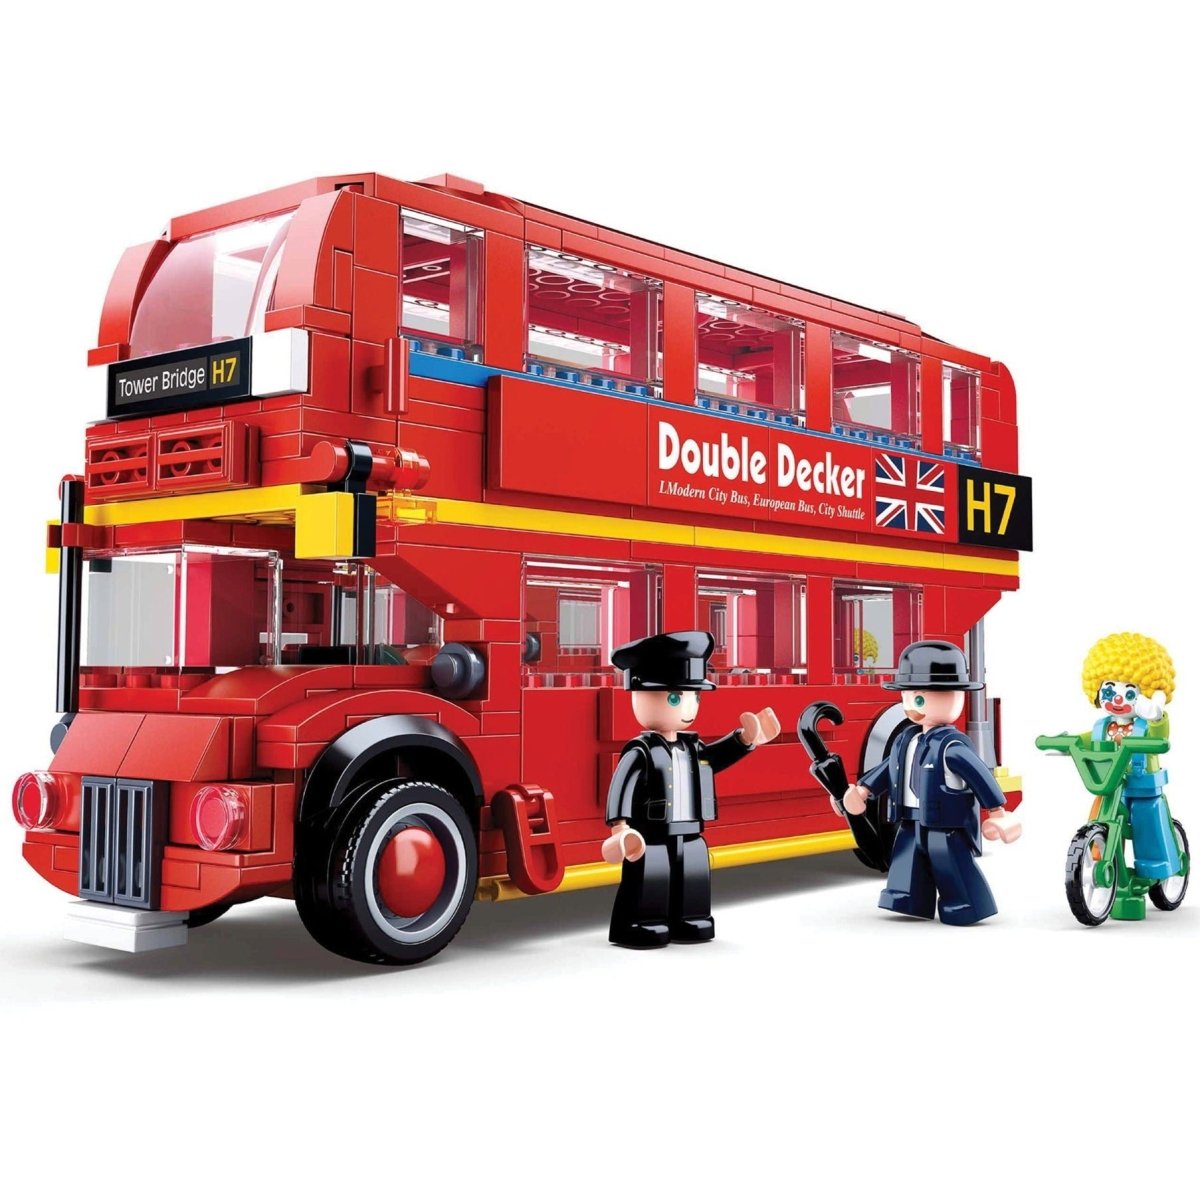 SLUBAN® Building Blocks Kit for Boys and Girls - London Bus - M38-B0708